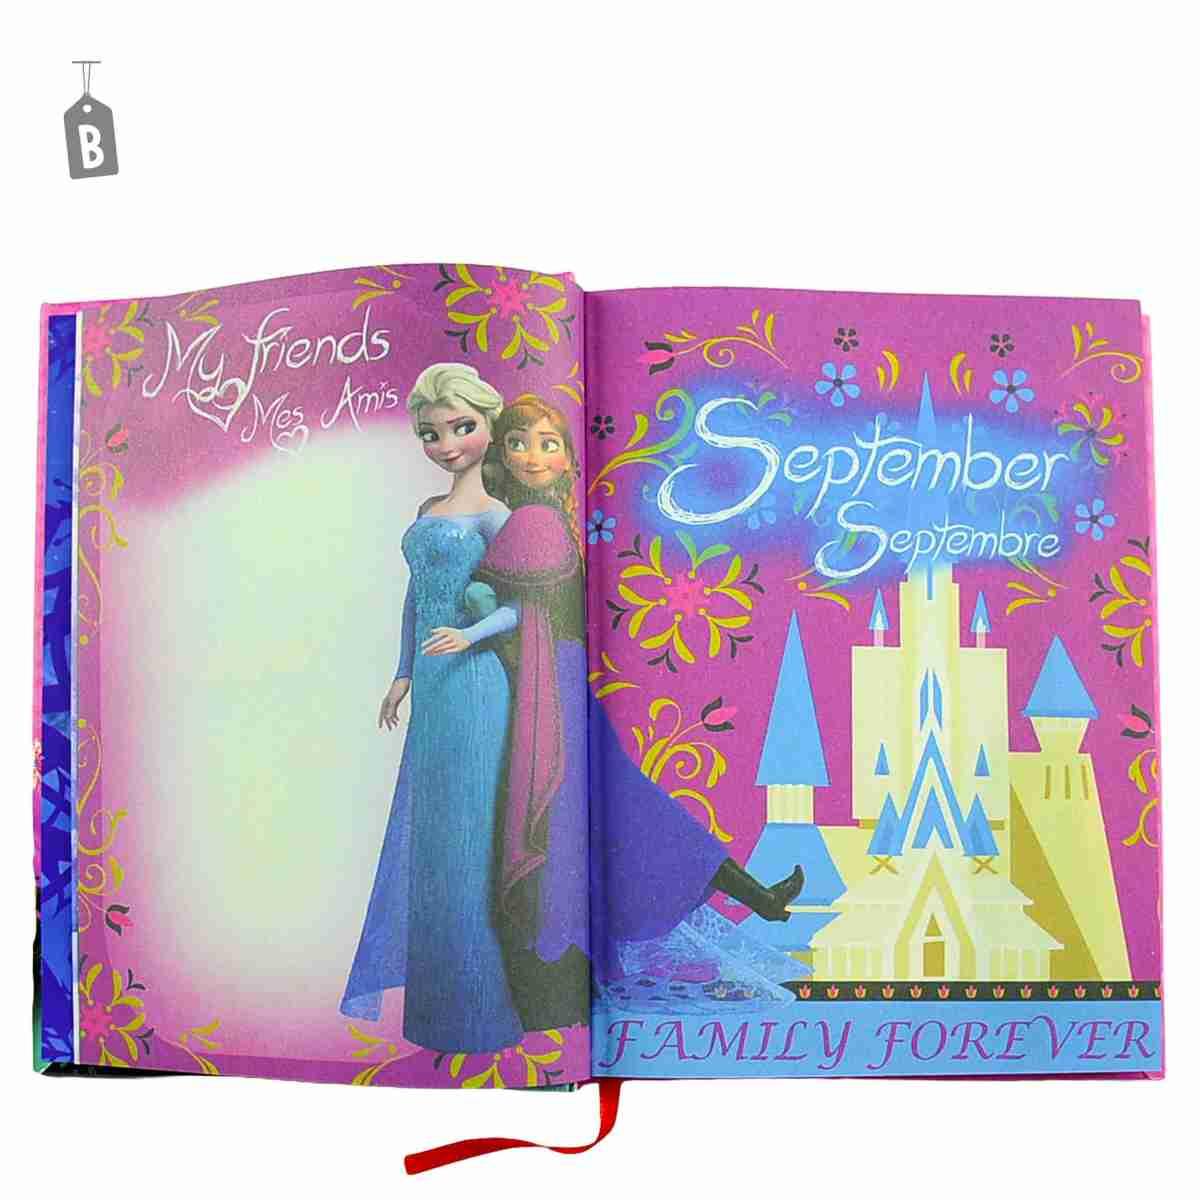 Diario Frozen Elsa e Anna cm.20 2 Modelli